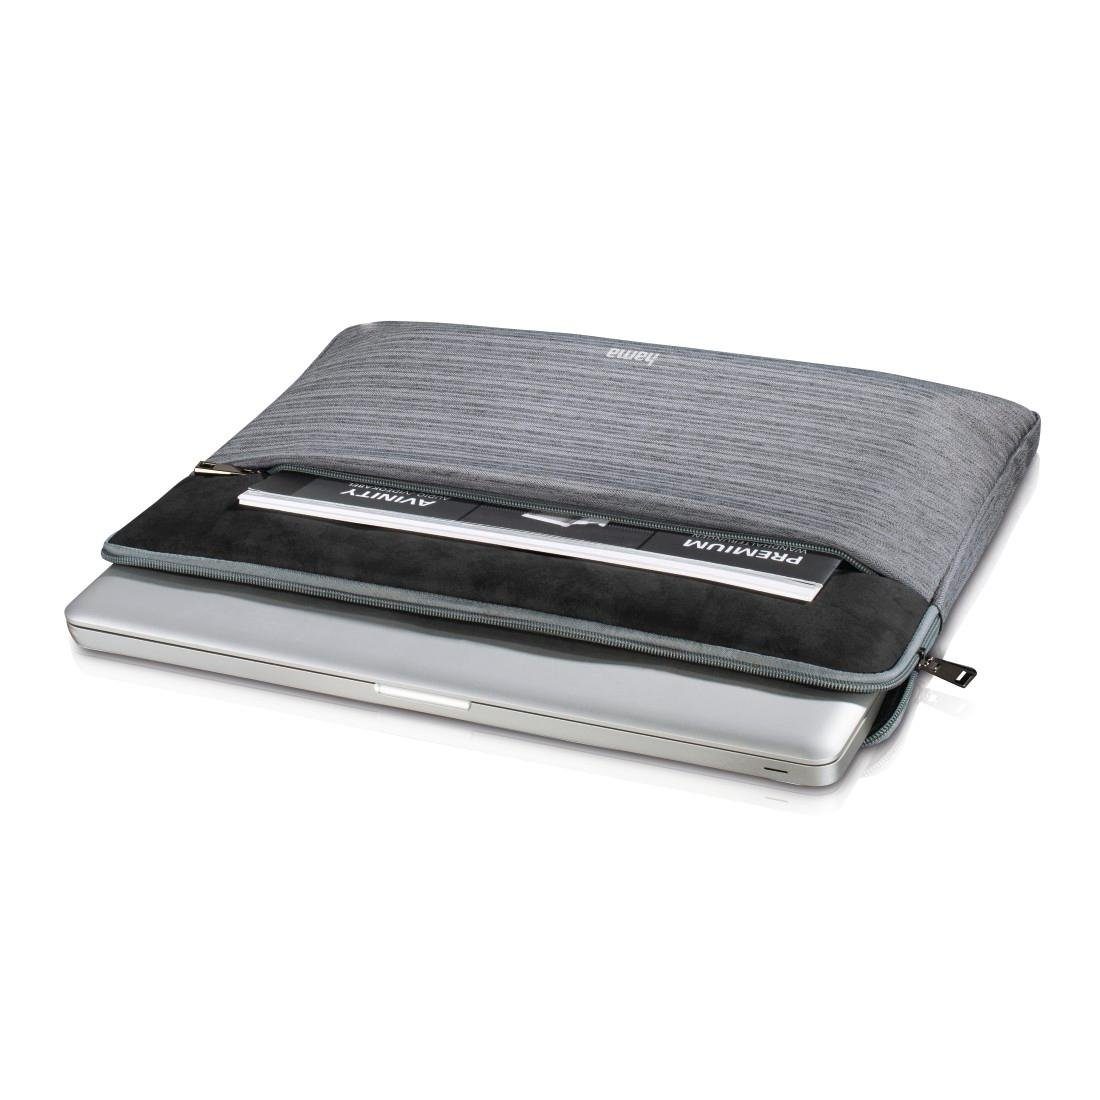 Hama Laptoptasche Laptop-Sleeve "Tayrona", cm Notebook-Sleeve (15,6), 40 hellgrau bis